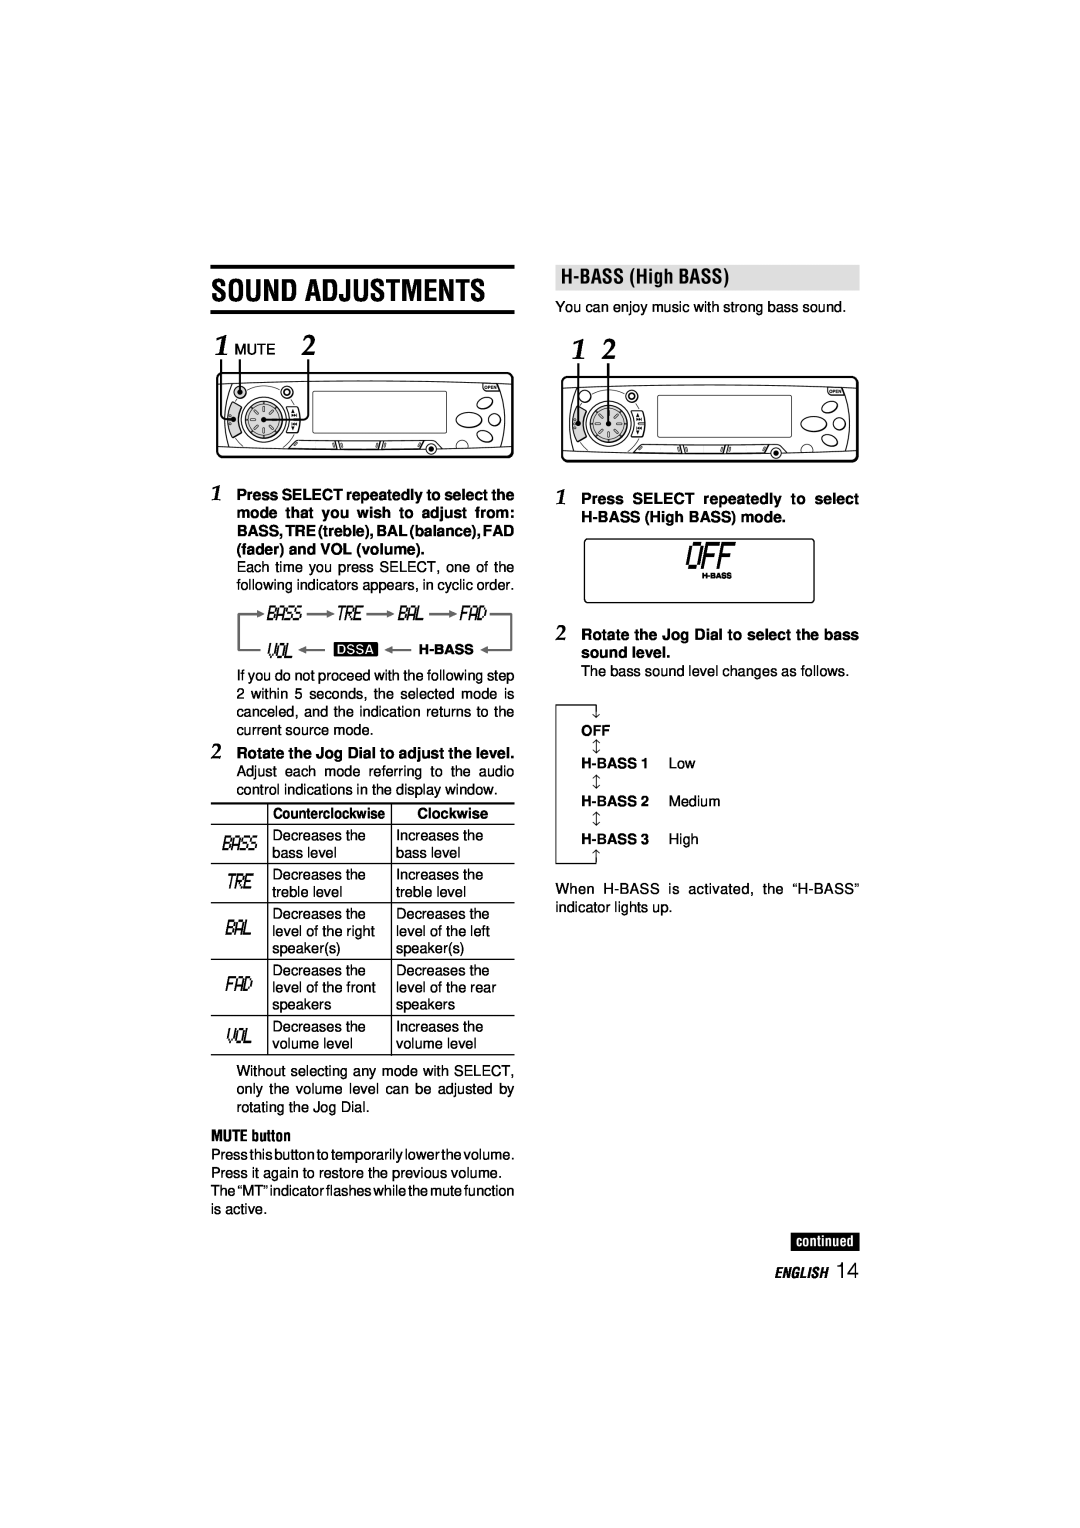 Aiwa CDC-MP3 manual Sound Adjustments, H-BASSHigh BASS, continued, English 